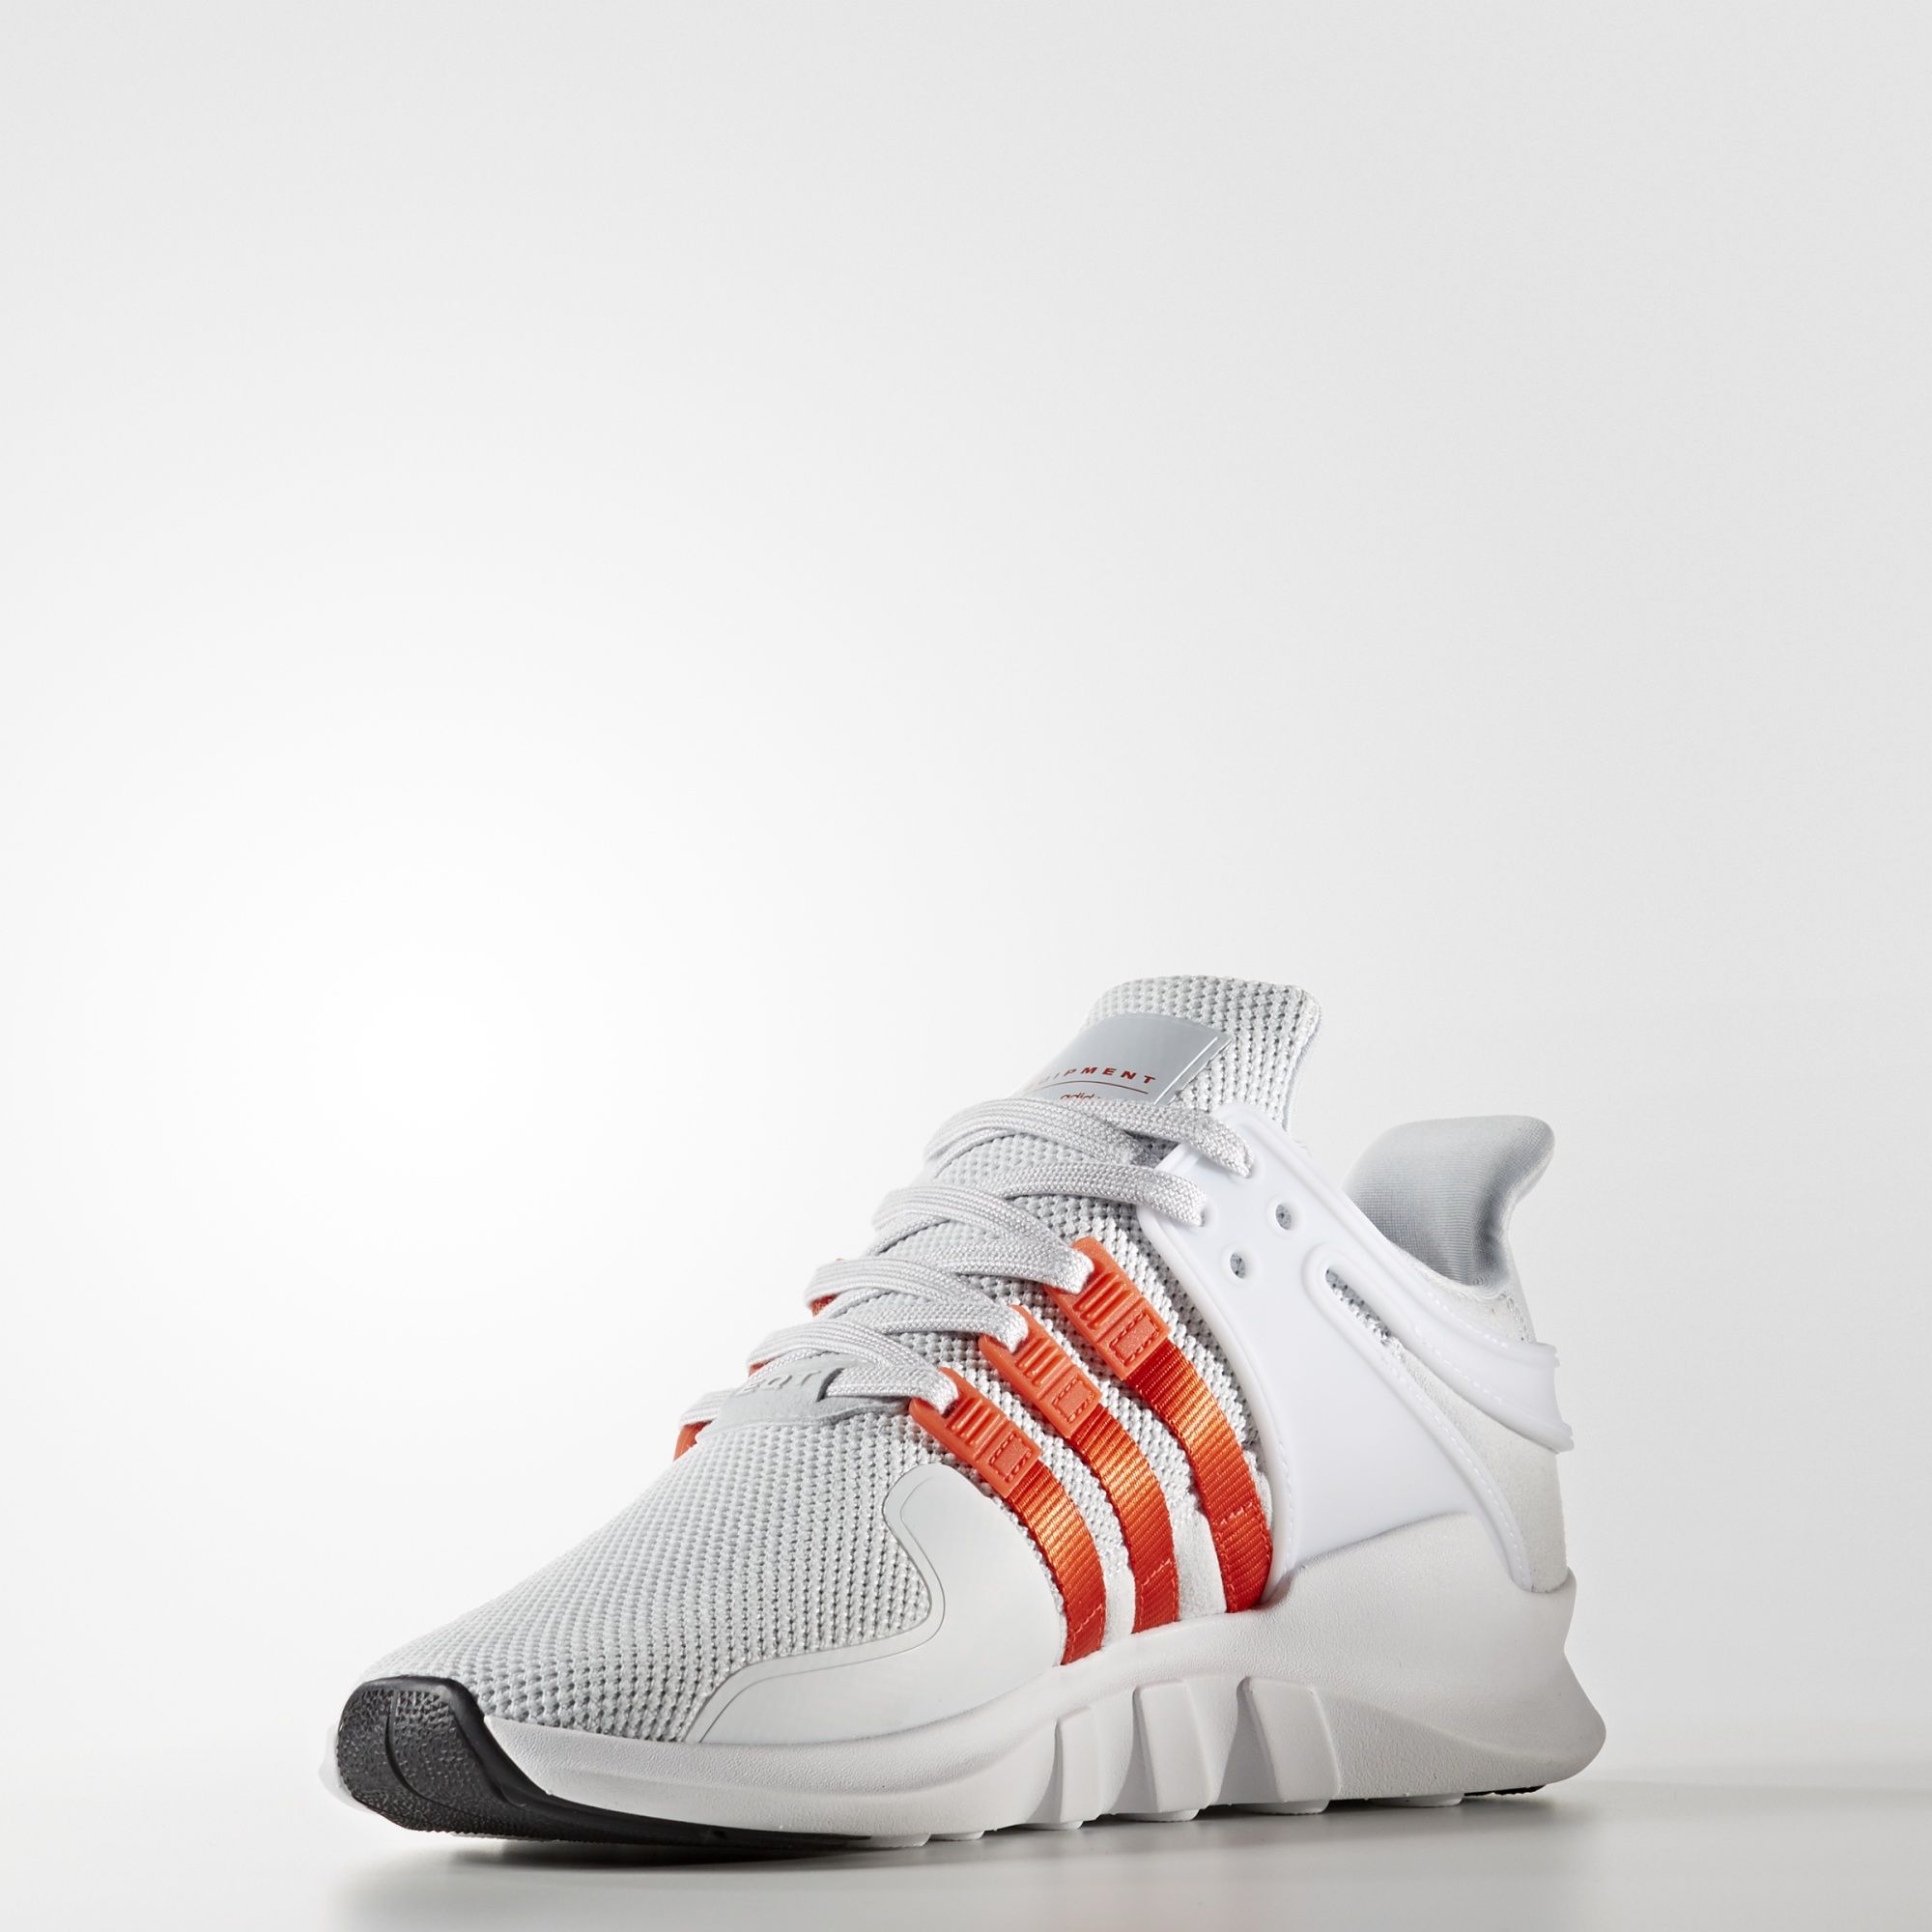 Adidas EQT Support ADV
Grey / Orange / White